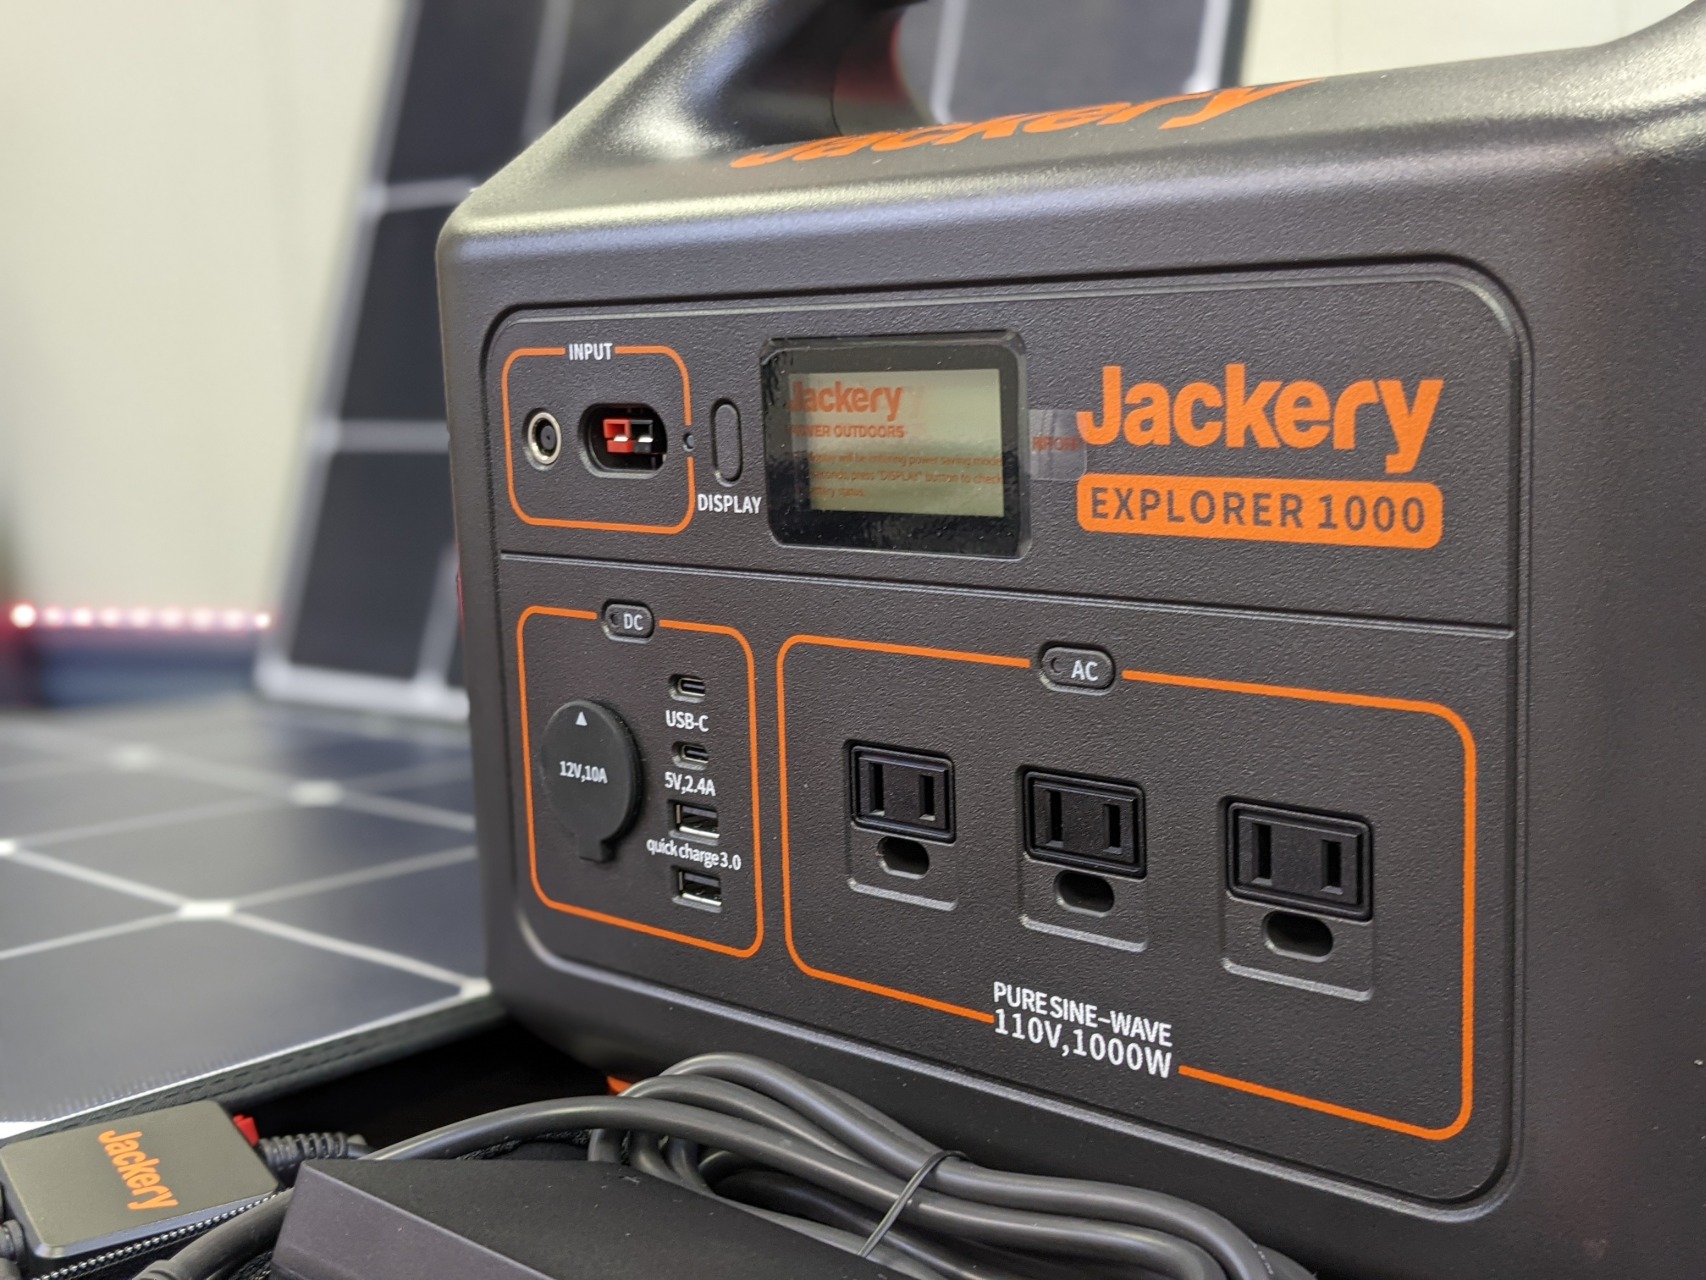 Jackery Explorer 1000 Portable Power Station review